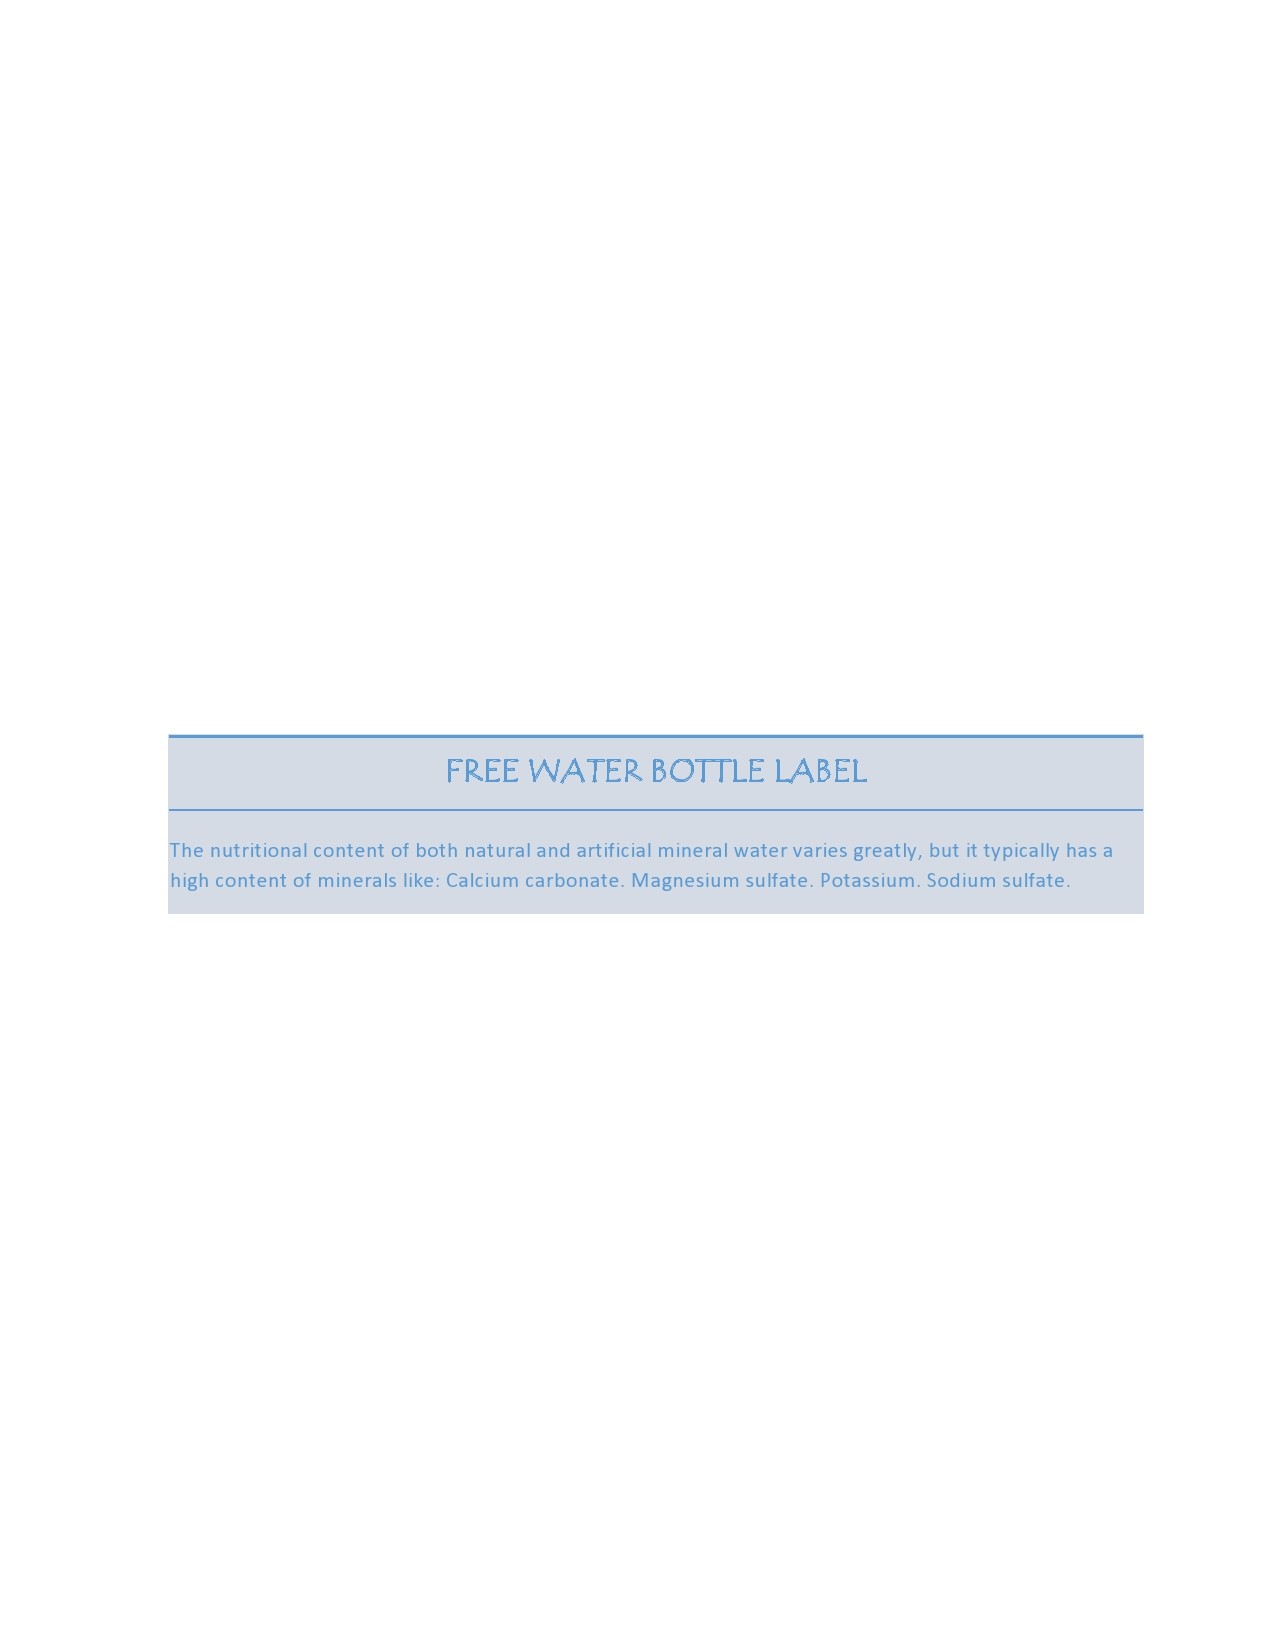 Free water bottle label template 28